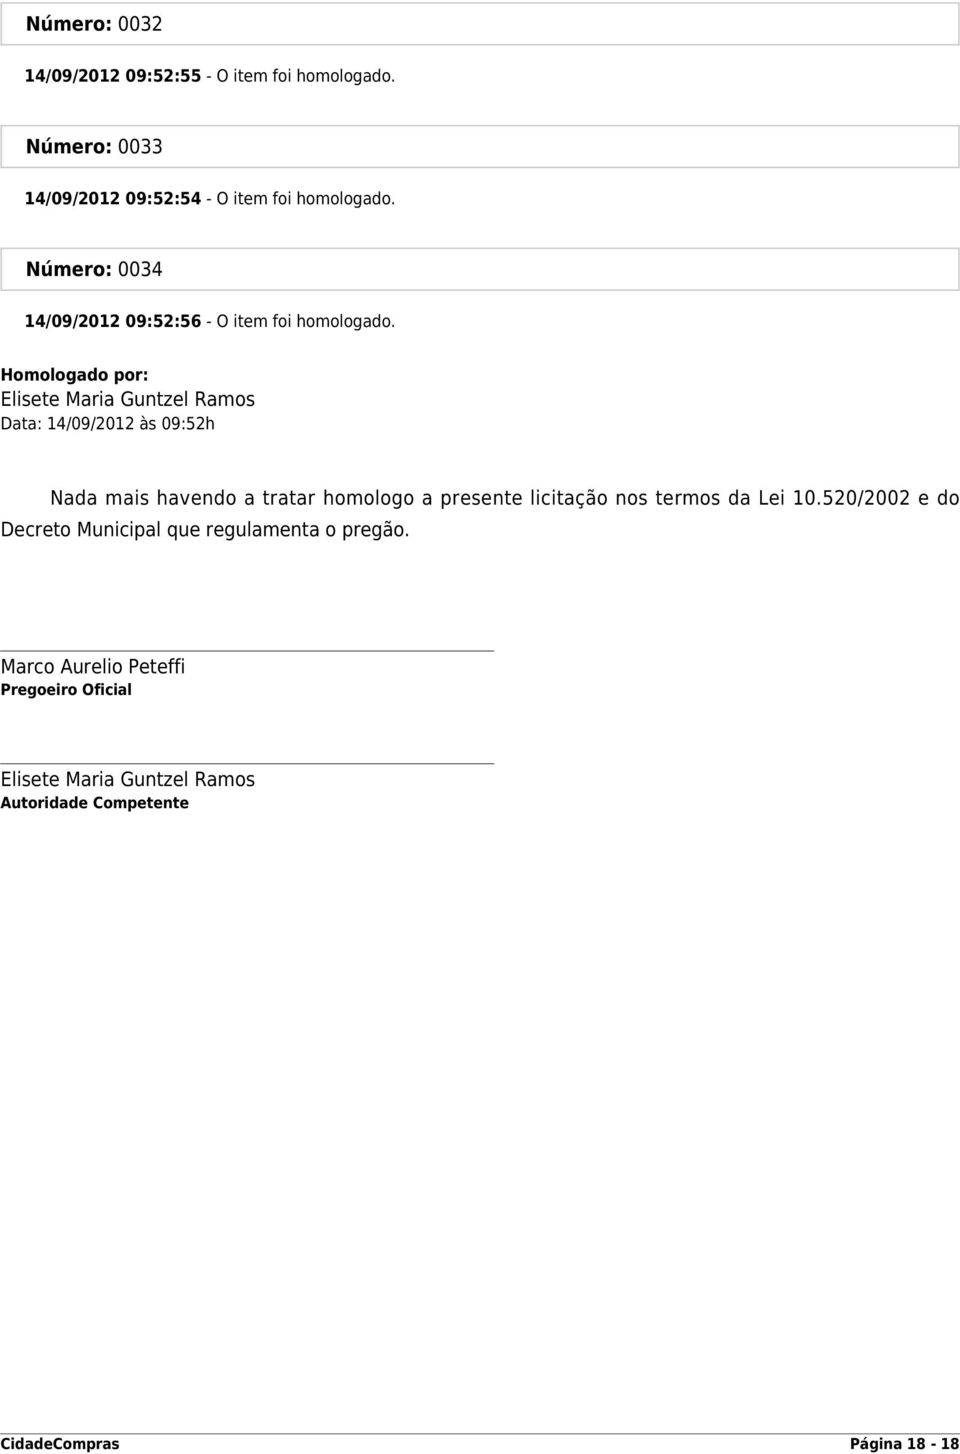 Homologado por: Elisete Maria Guntzel Ramos Data: 14/09/2012 às 09:52h Nada mais havendo a tratar homologo a presente